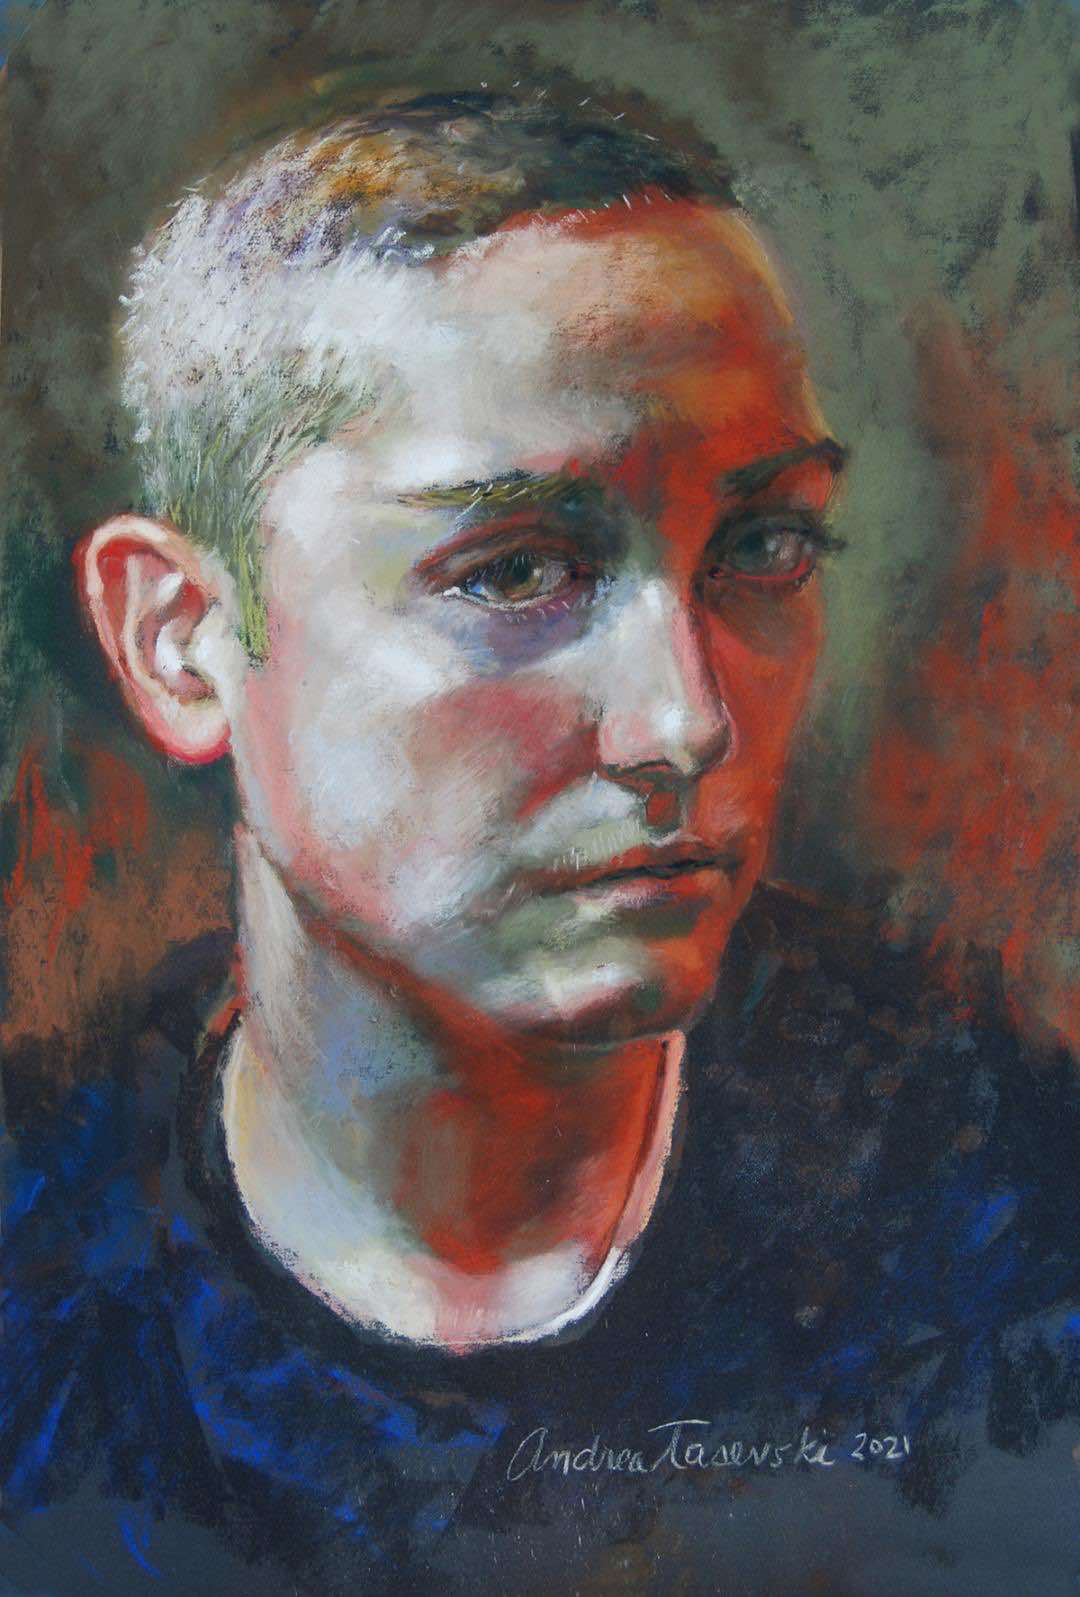 Tasevski Painting Wins Portrait Award at Adirondack National Pastel Exhibition